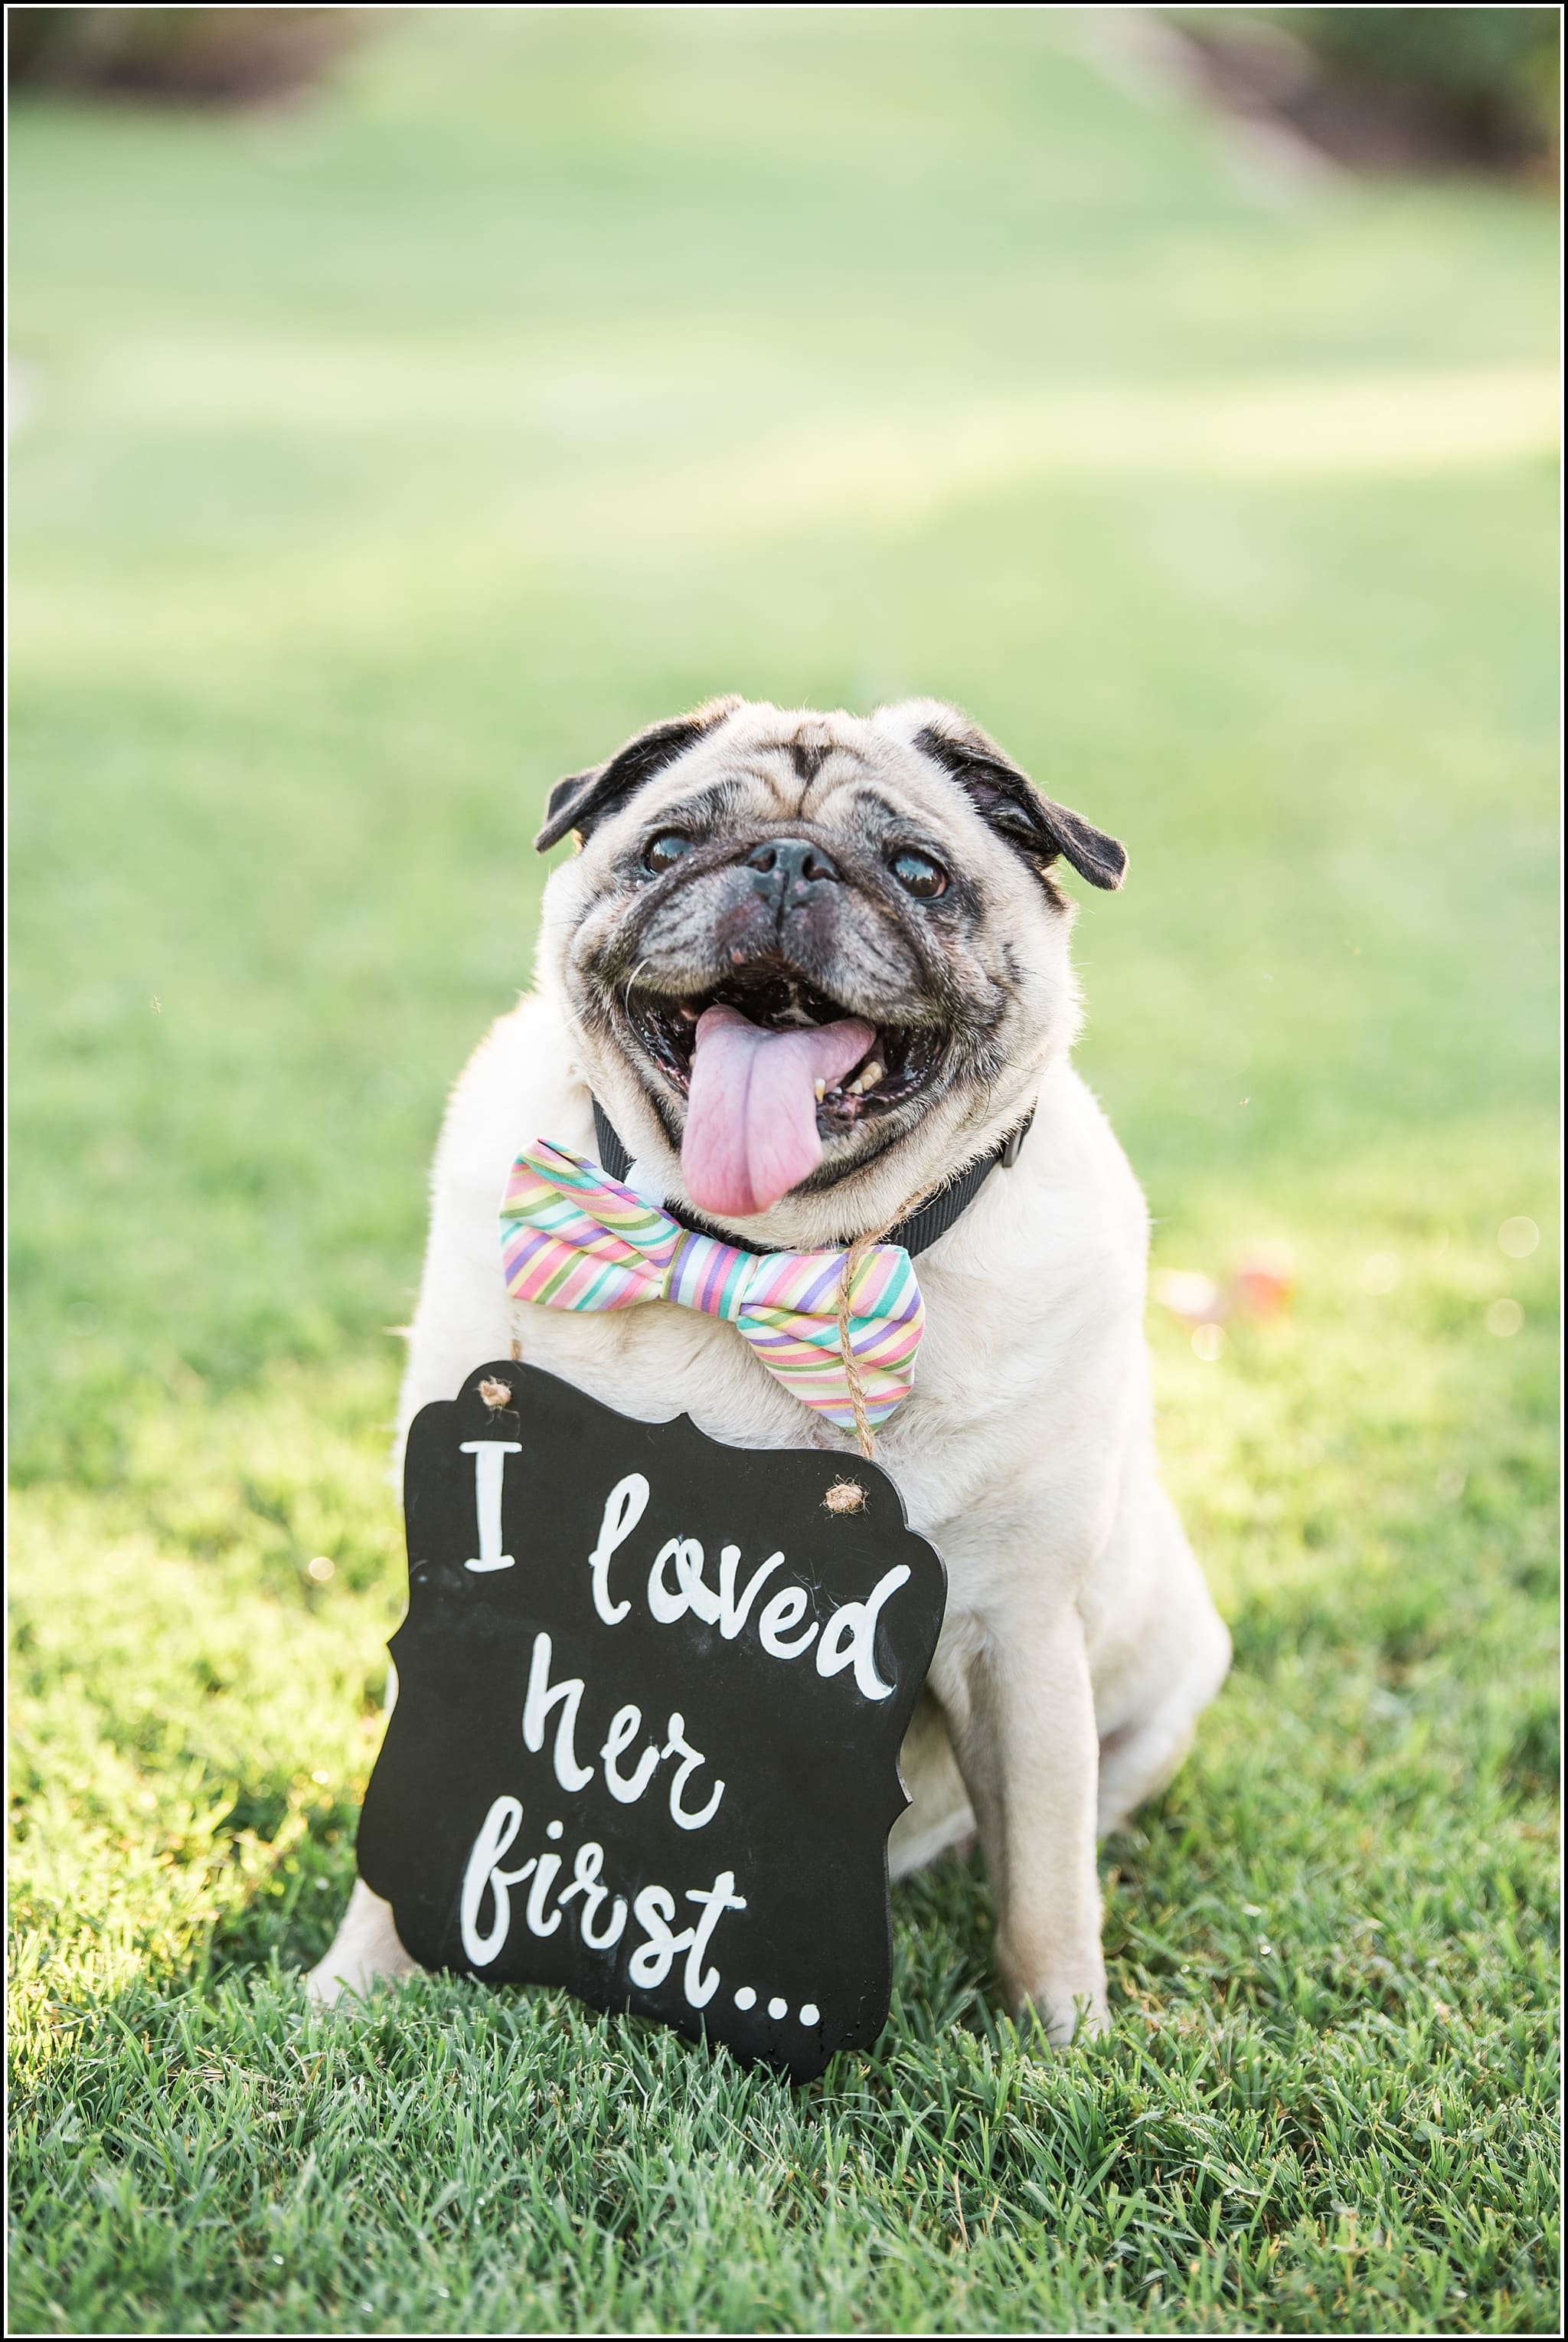  favorite wedding images 2016, wedding photos from 2016, our favorite wedding photos, dogs at wedding, dog wedding, wedding dog